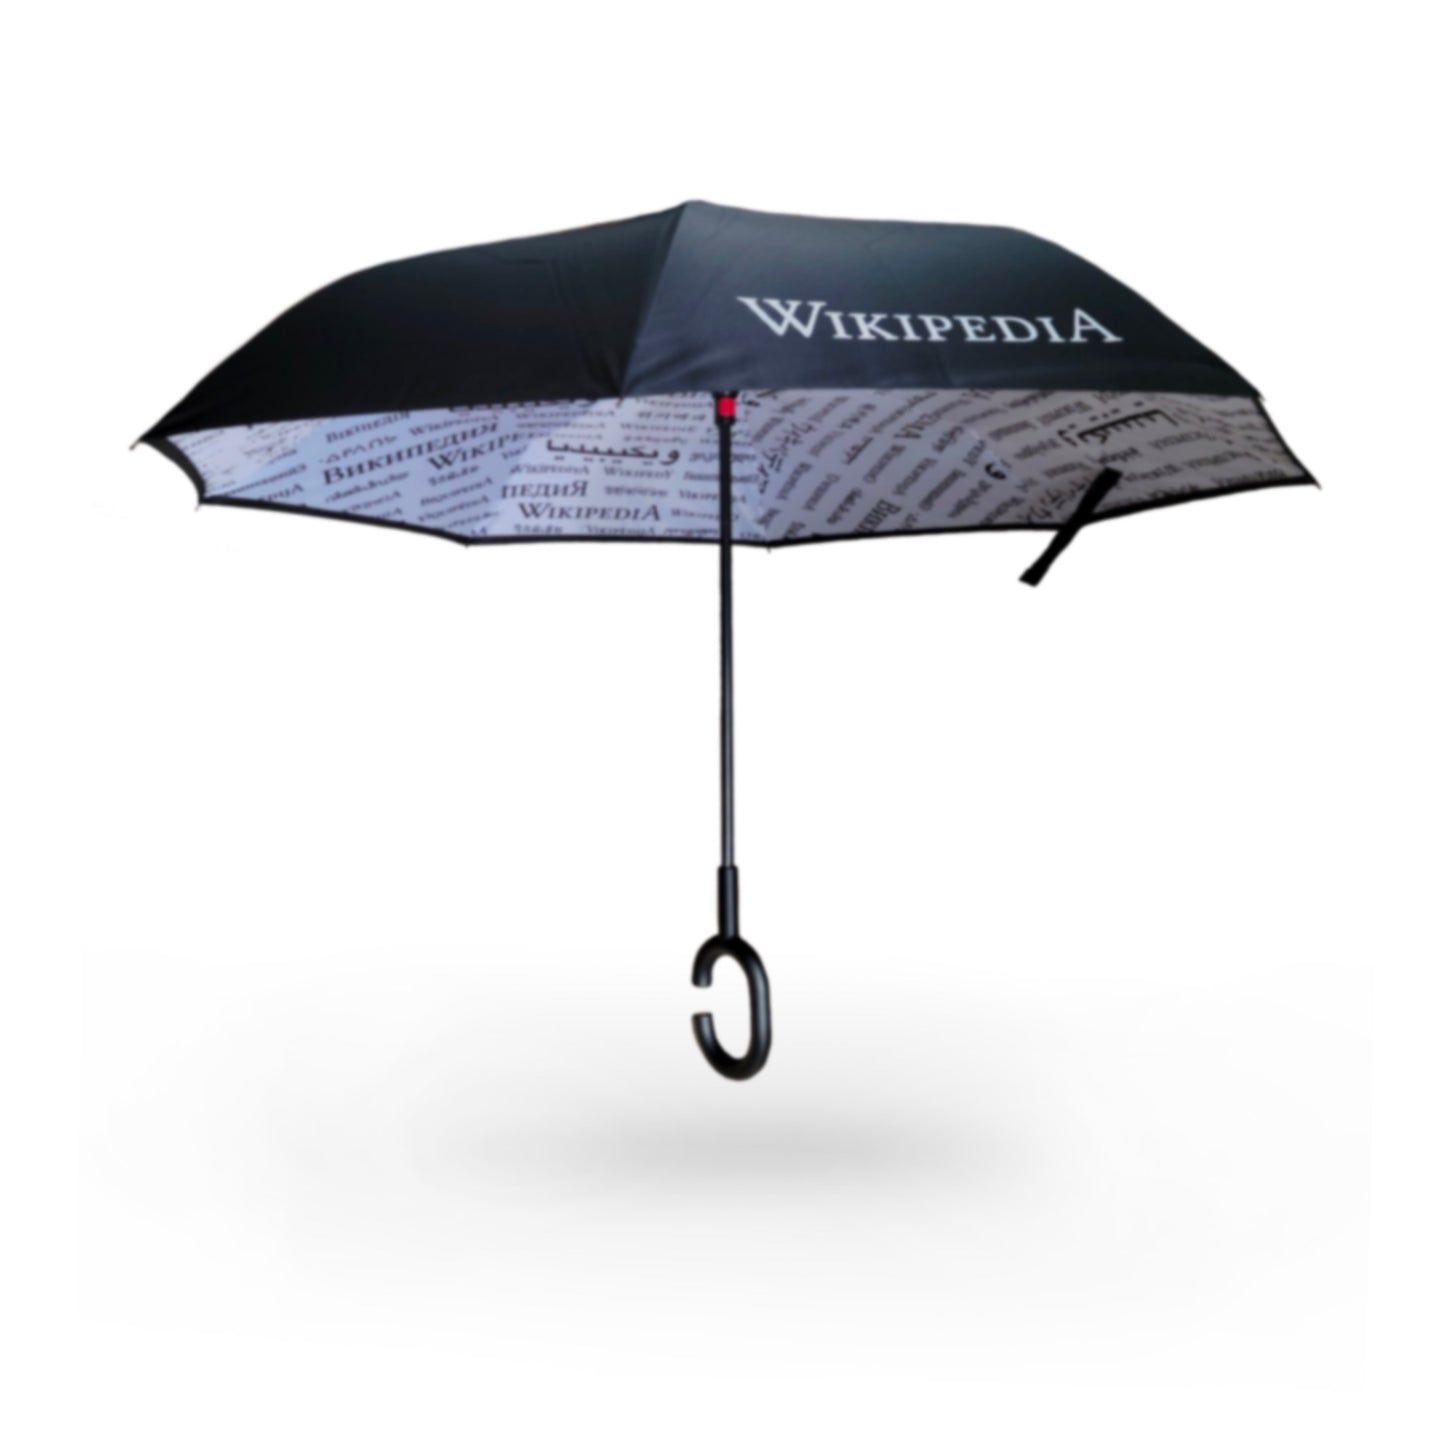 Guarda-chuva com os idiomas da "Wikipedia"